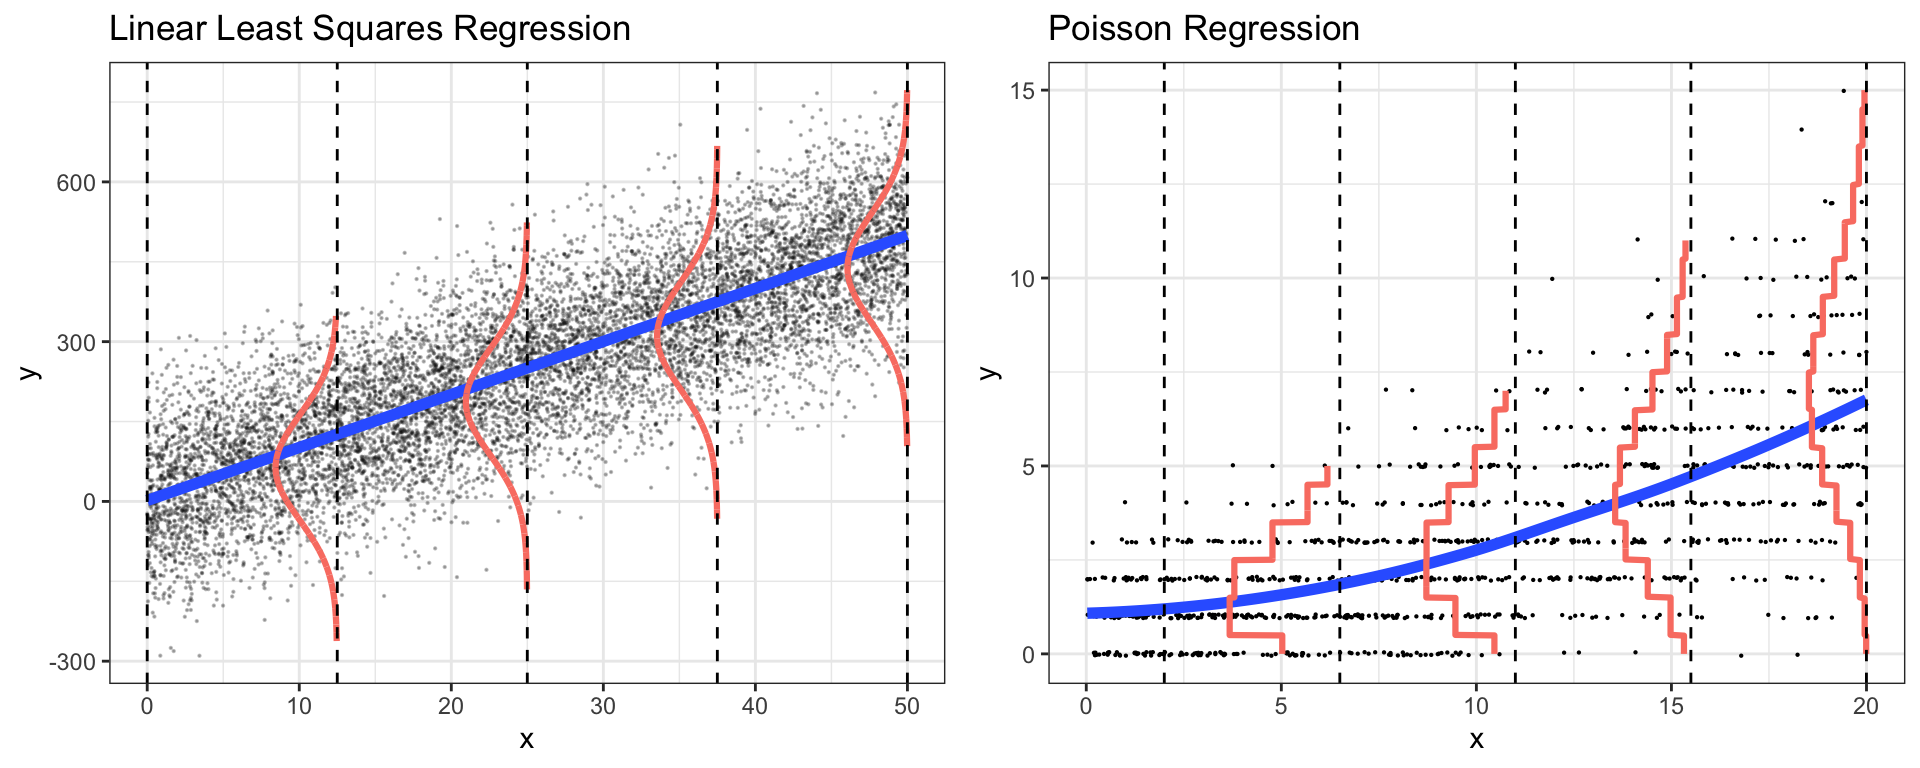 Regression models: Linear regression (left) and Poisson regression (right).